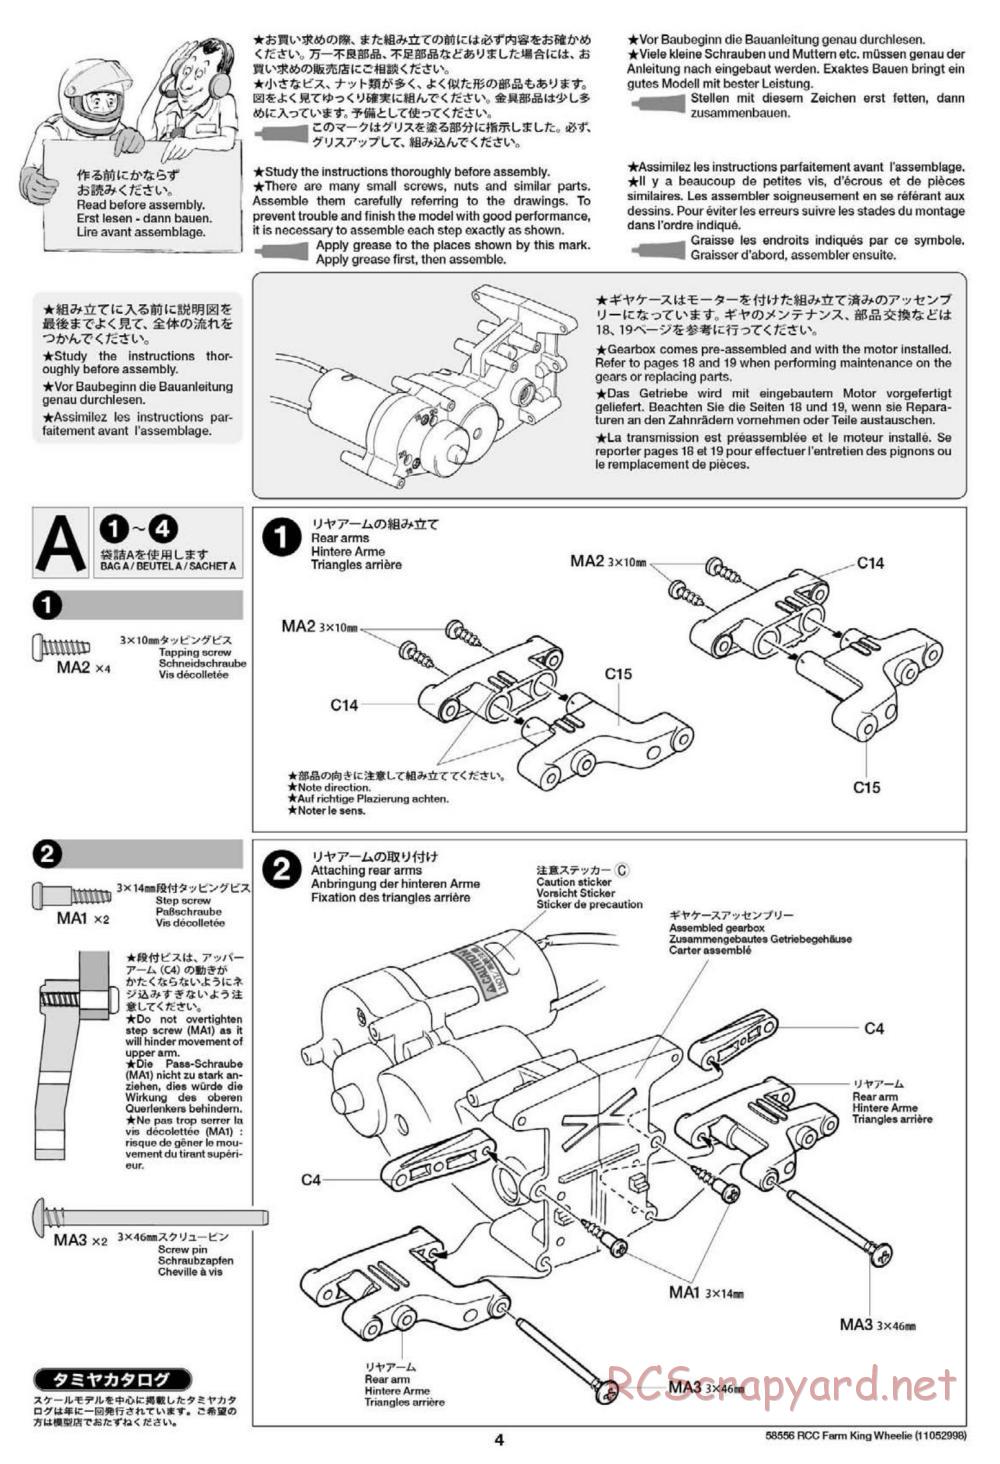 Tamiya - Farm King Wheelie Chassis - Manual - Page 4